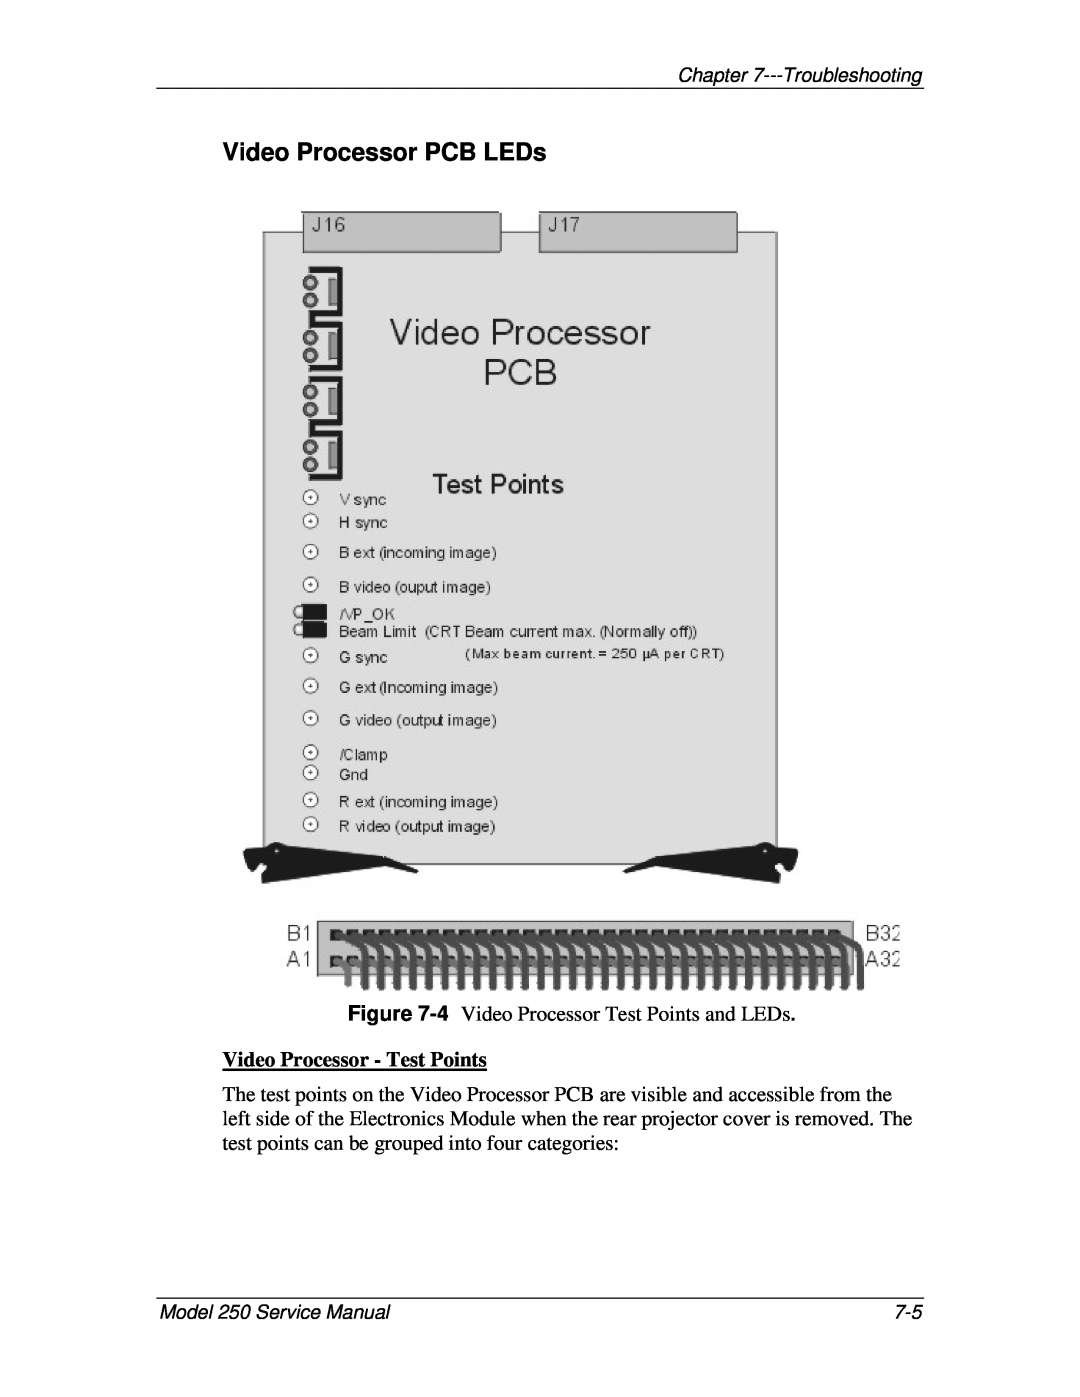 JVC service manual Video Processor PCB LEDs, Video Processor - Test Points, Troubleshooting, Model 250 Service Manual 